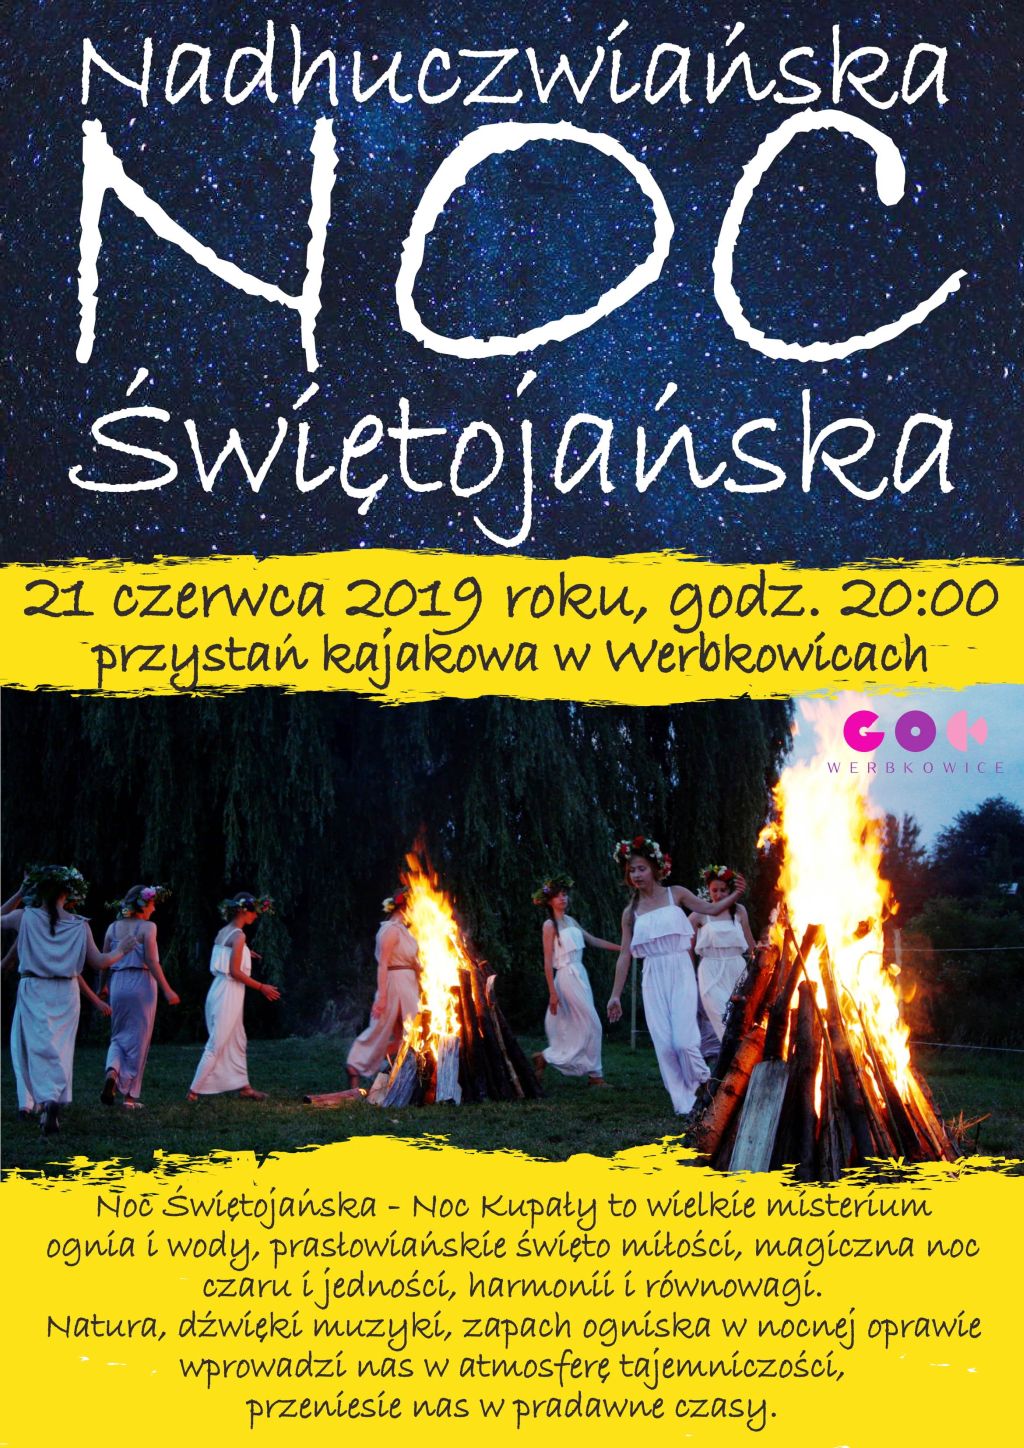 Plakat "Nadhuczwiańska Noc Świętojańska 2019"